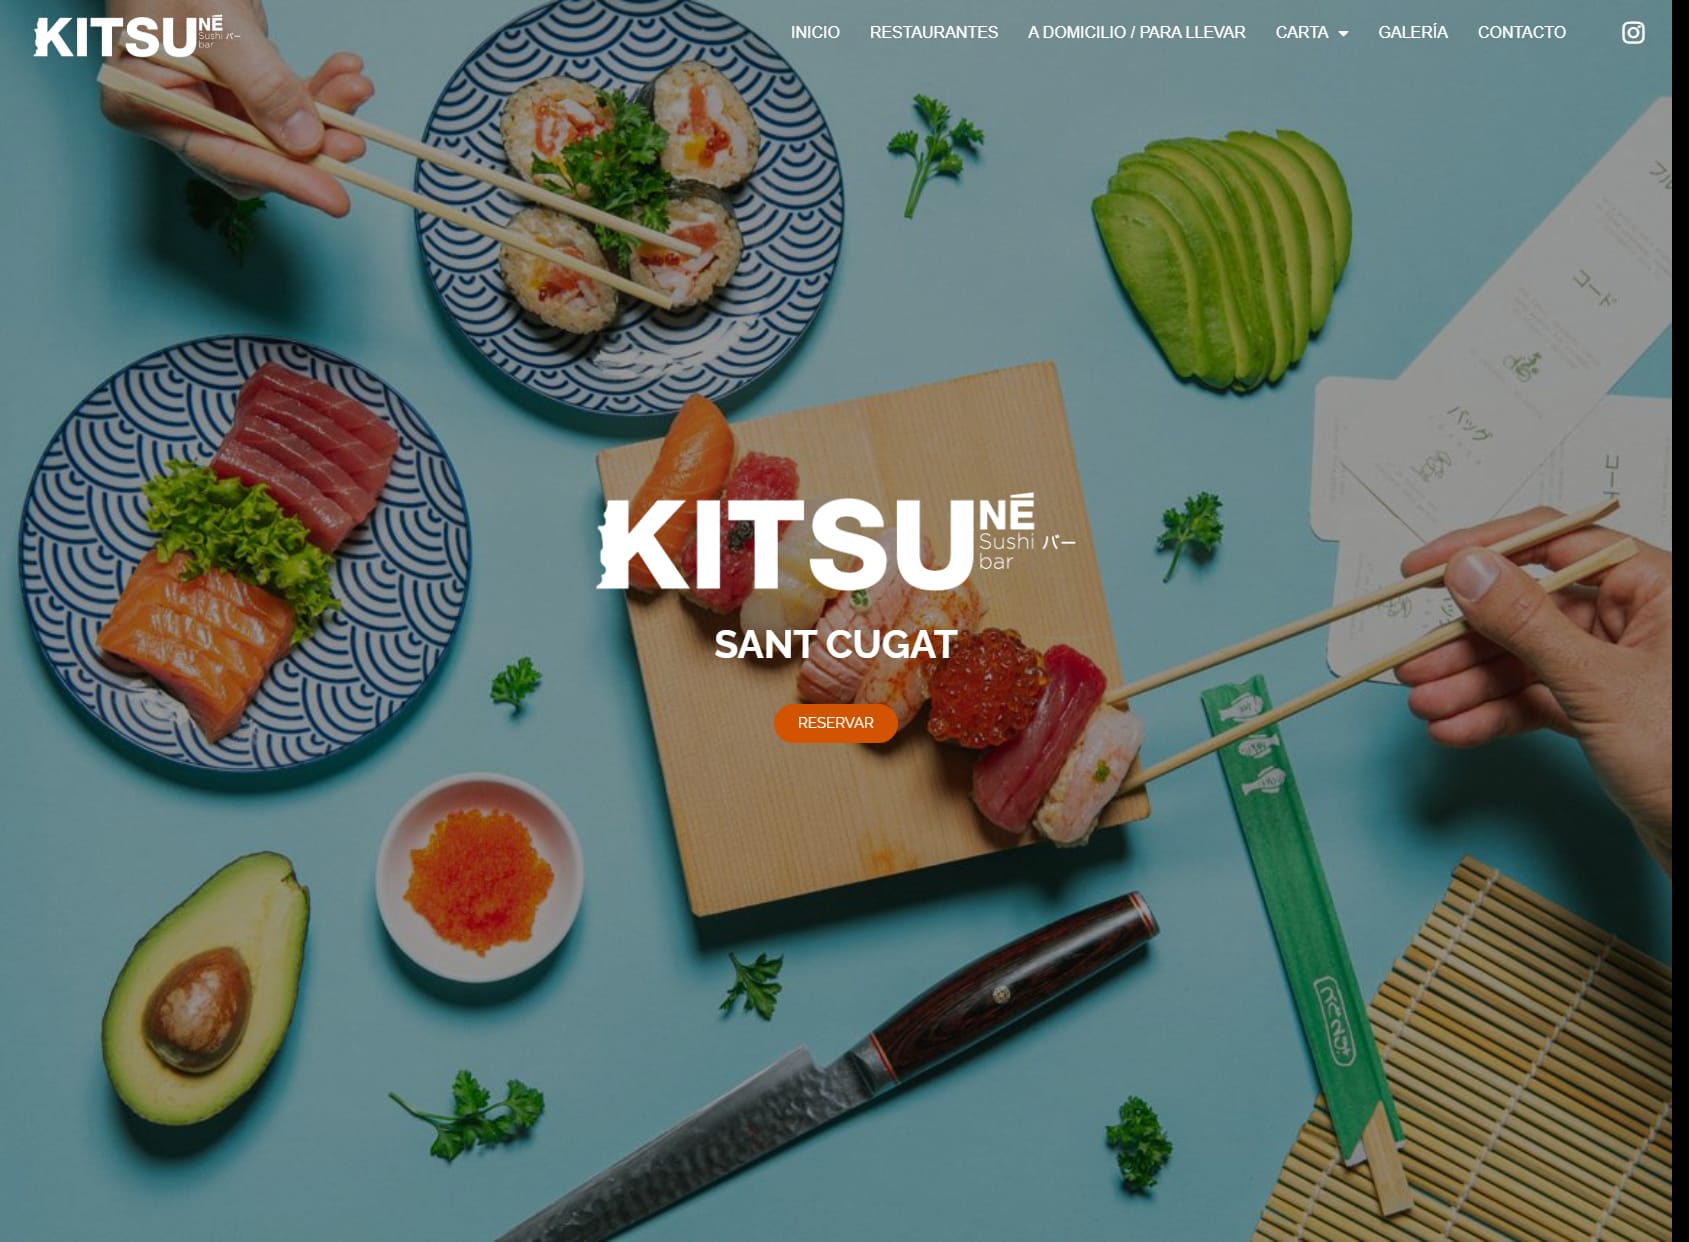 KITSUNE - Restaurant japonès a Sant Cugat